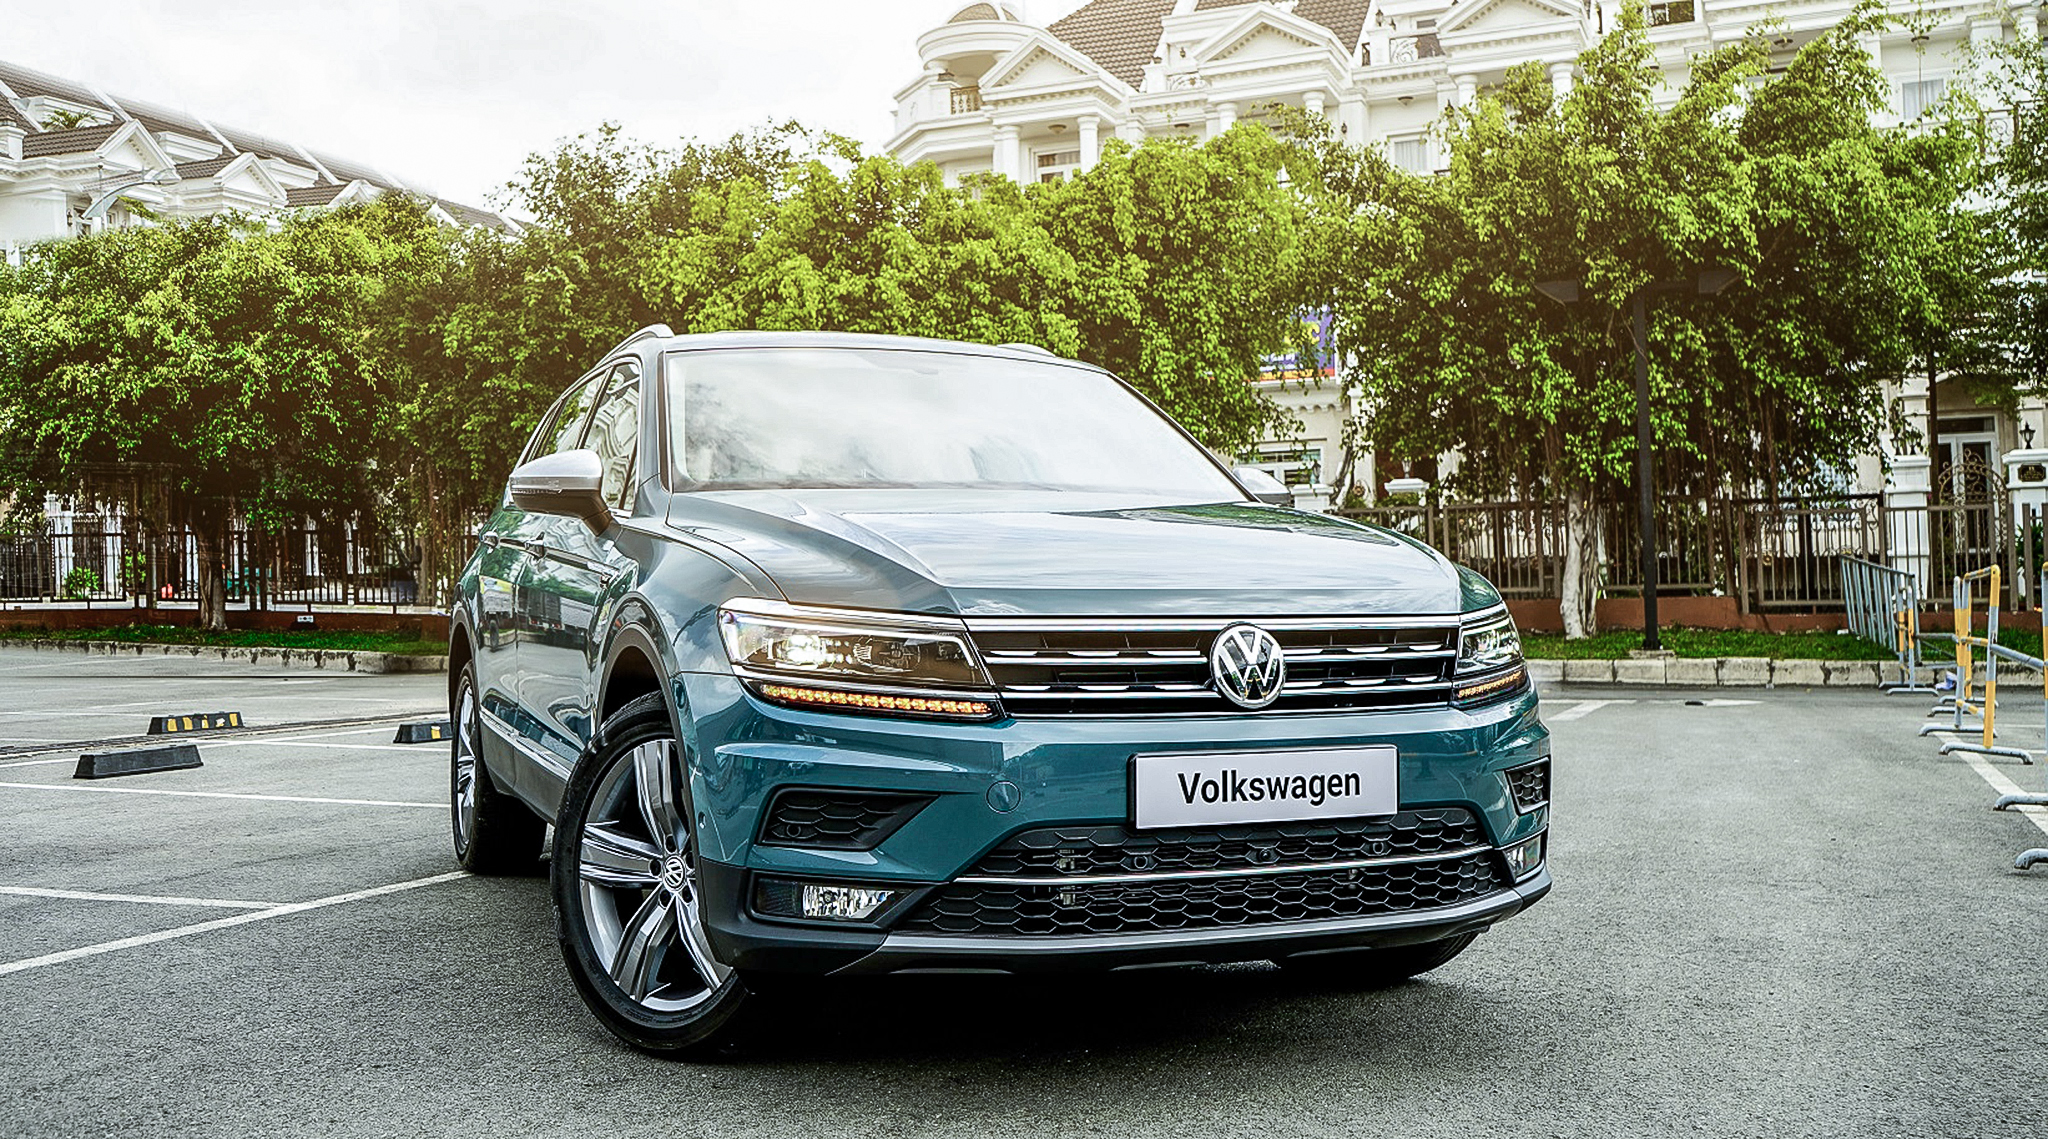 VW Tiguan Allspace Luxury giá 1,85 tỷ, đấu Mercedes GLC250 tại VN